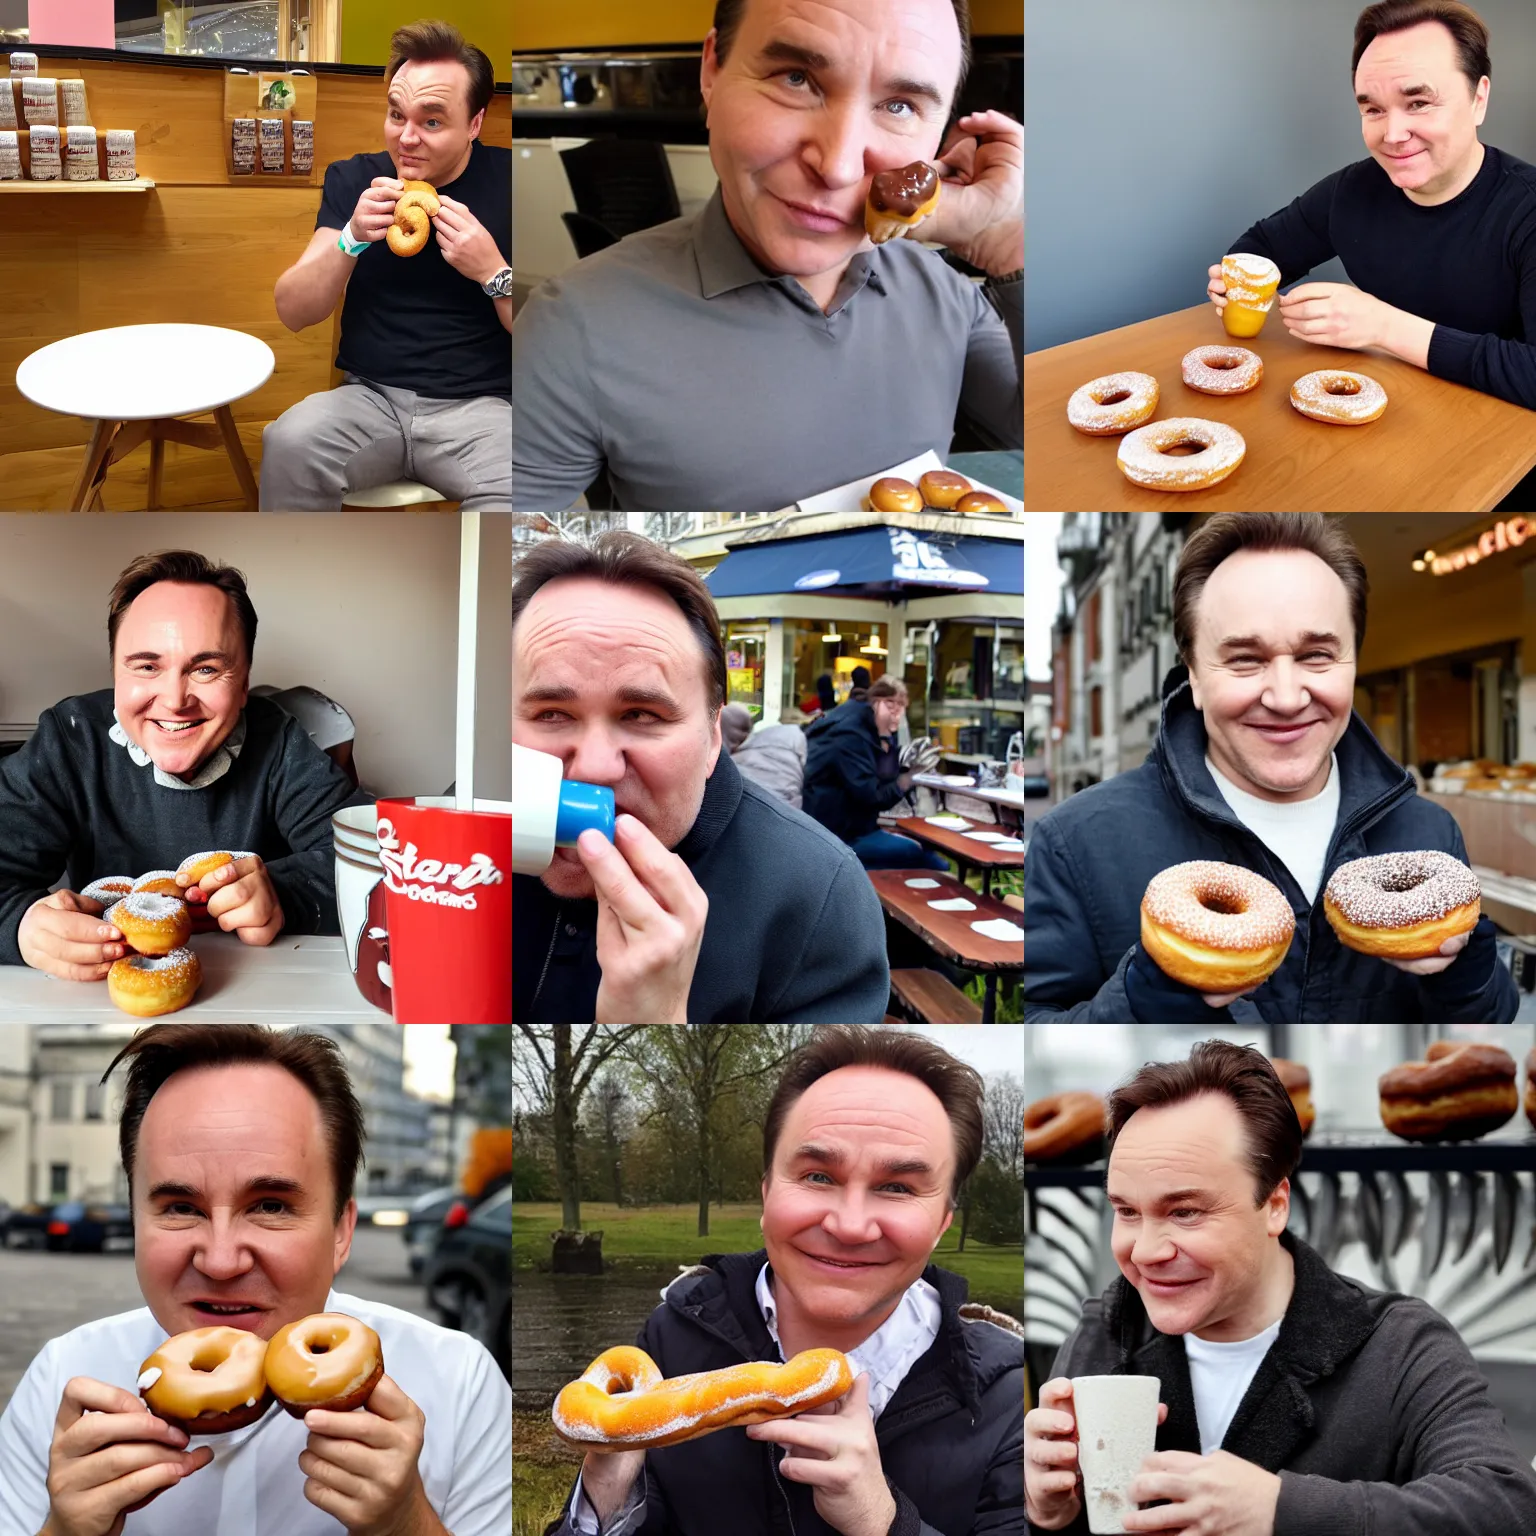 Prompt: Stefan Löfven drinking eating doughnuts